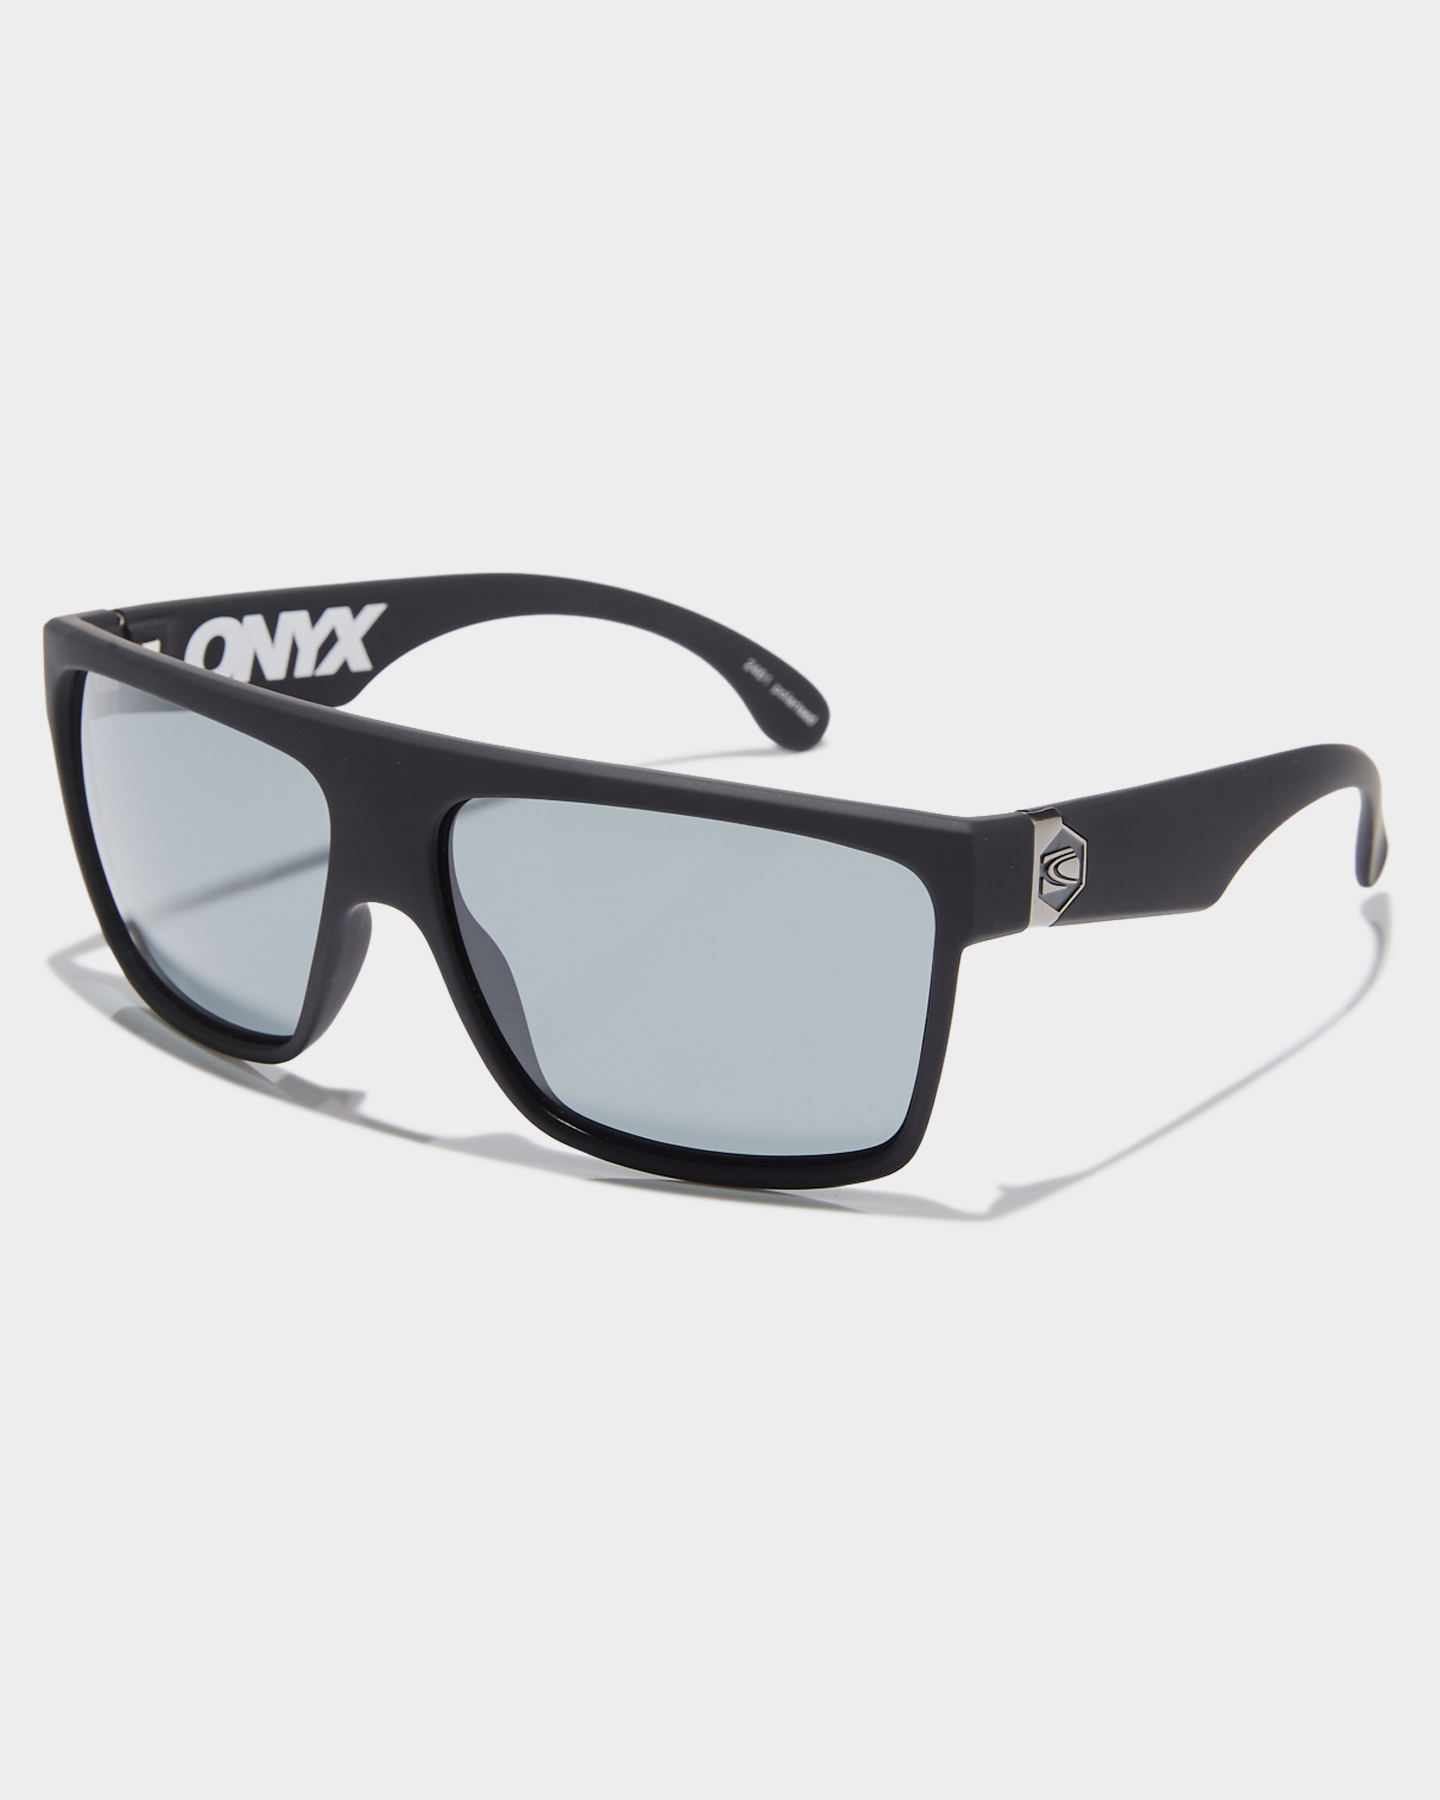 Carve Men's Onyx Polarized Sunglasses Stainless Steel Glass Black | eBay